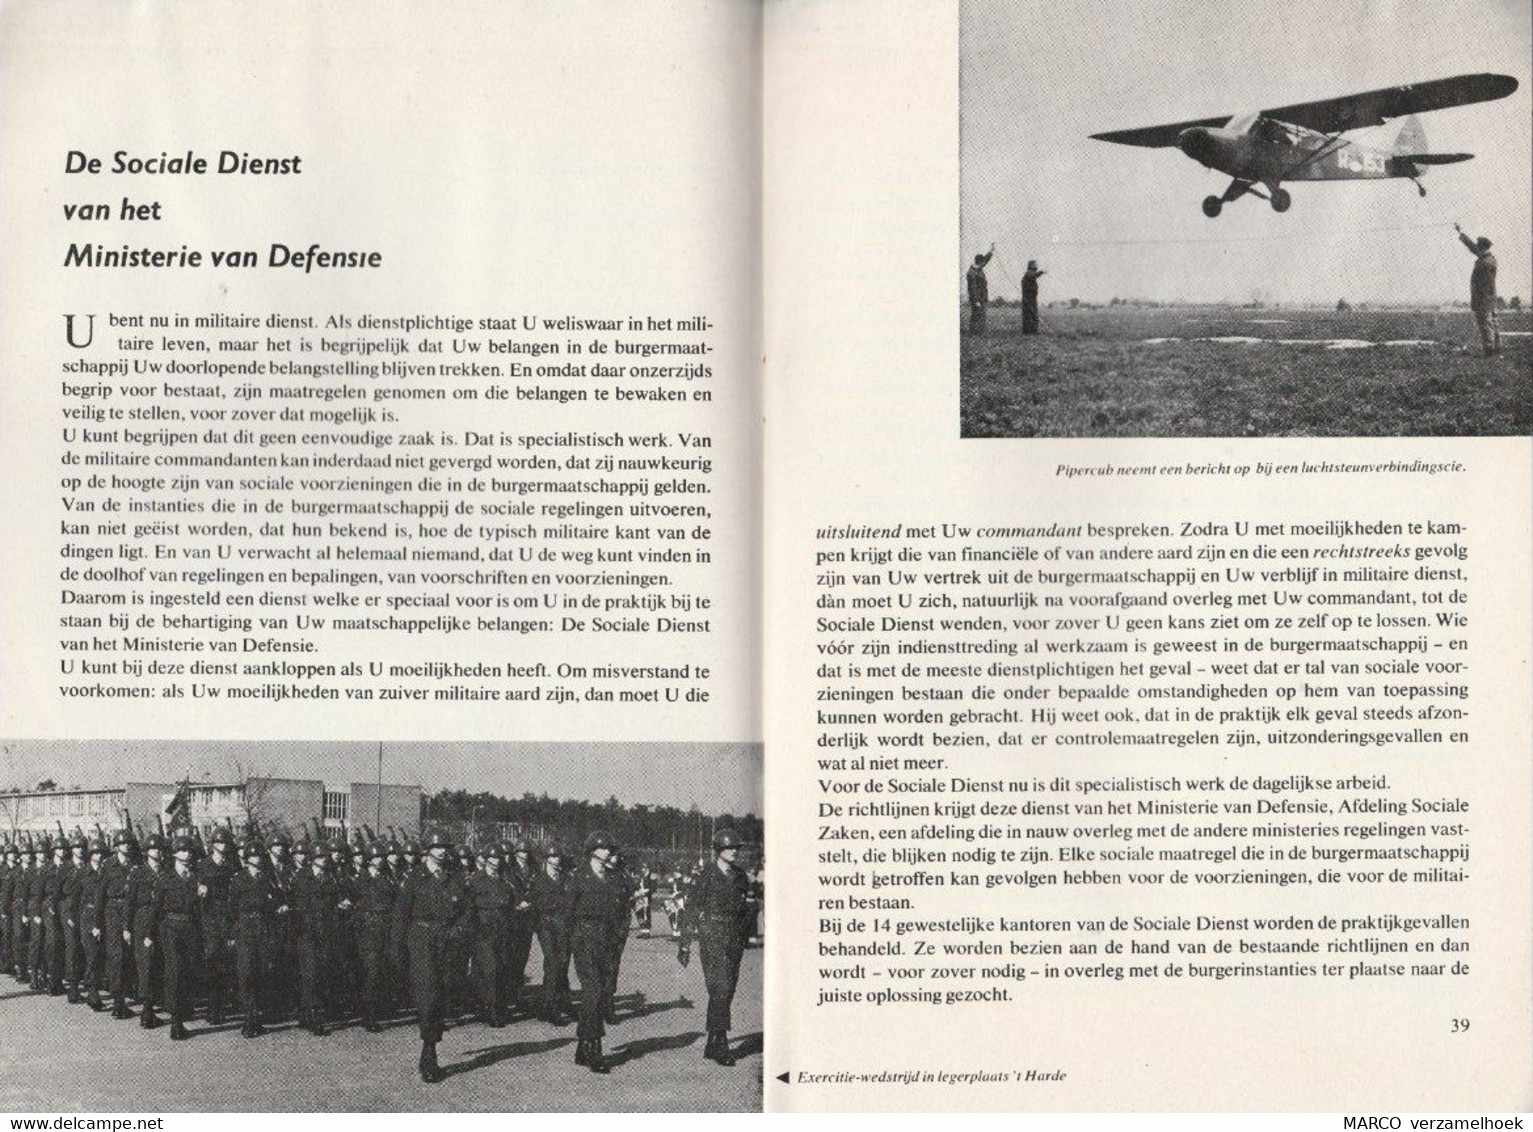 Dienst Departement Van Defensie 1964 Veilig Kompas-compas - Dutch